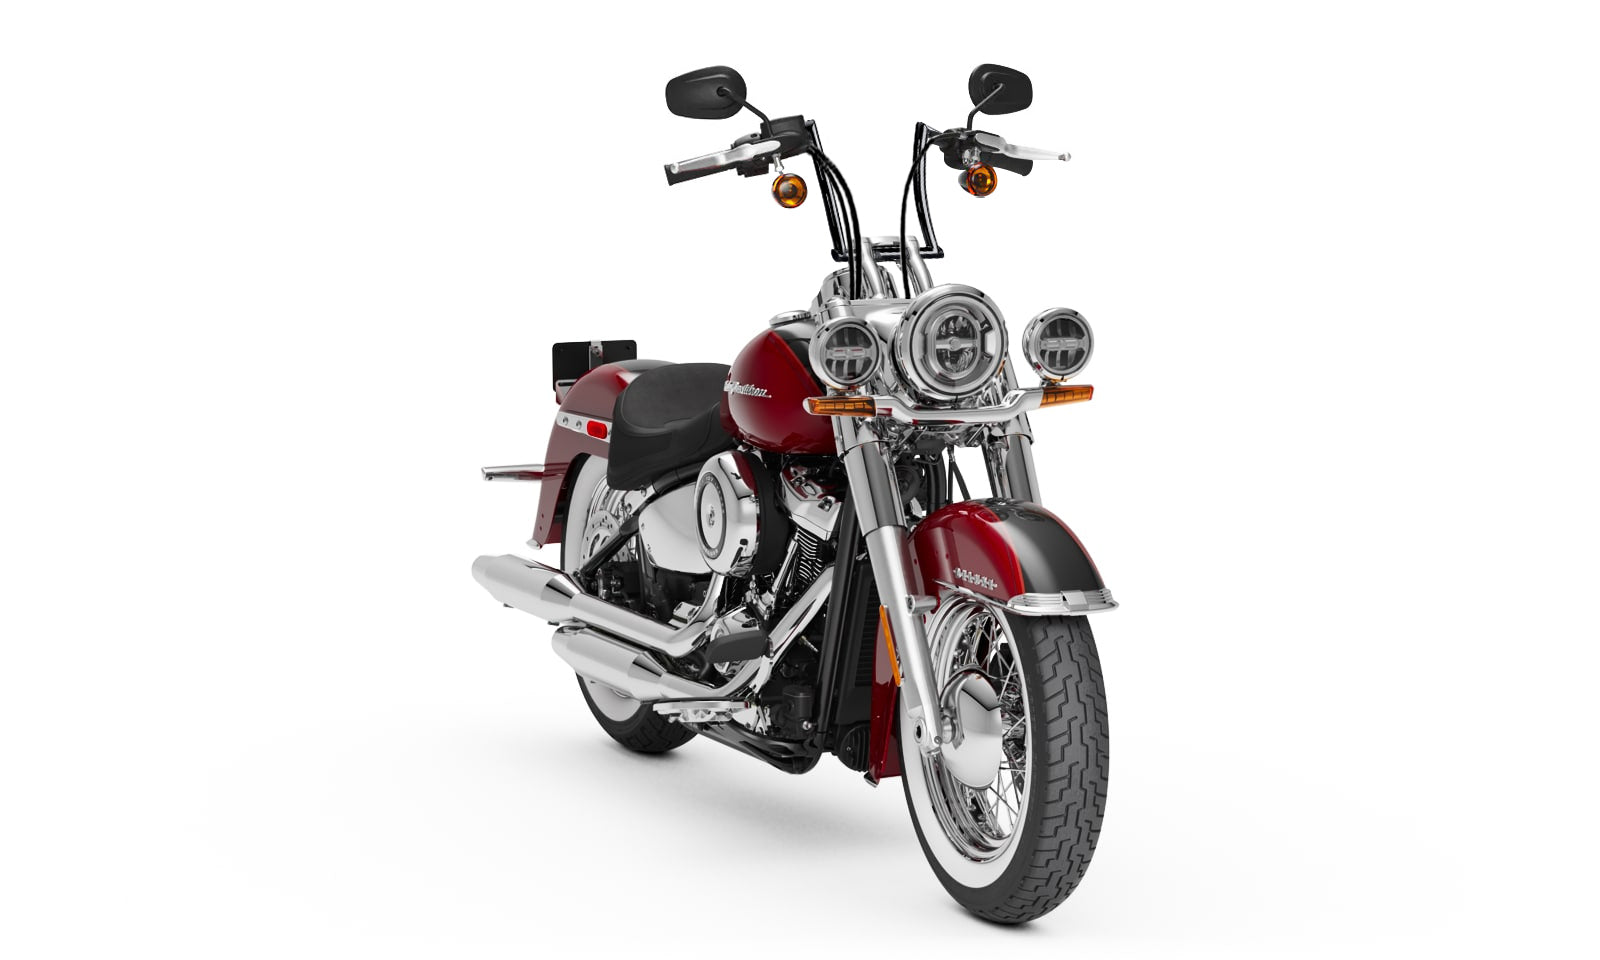 Viking Iron Born 9" Handlebar For Harley Softail Deluxe FLSTN/I Gloss Black Bag on Bike View @expand